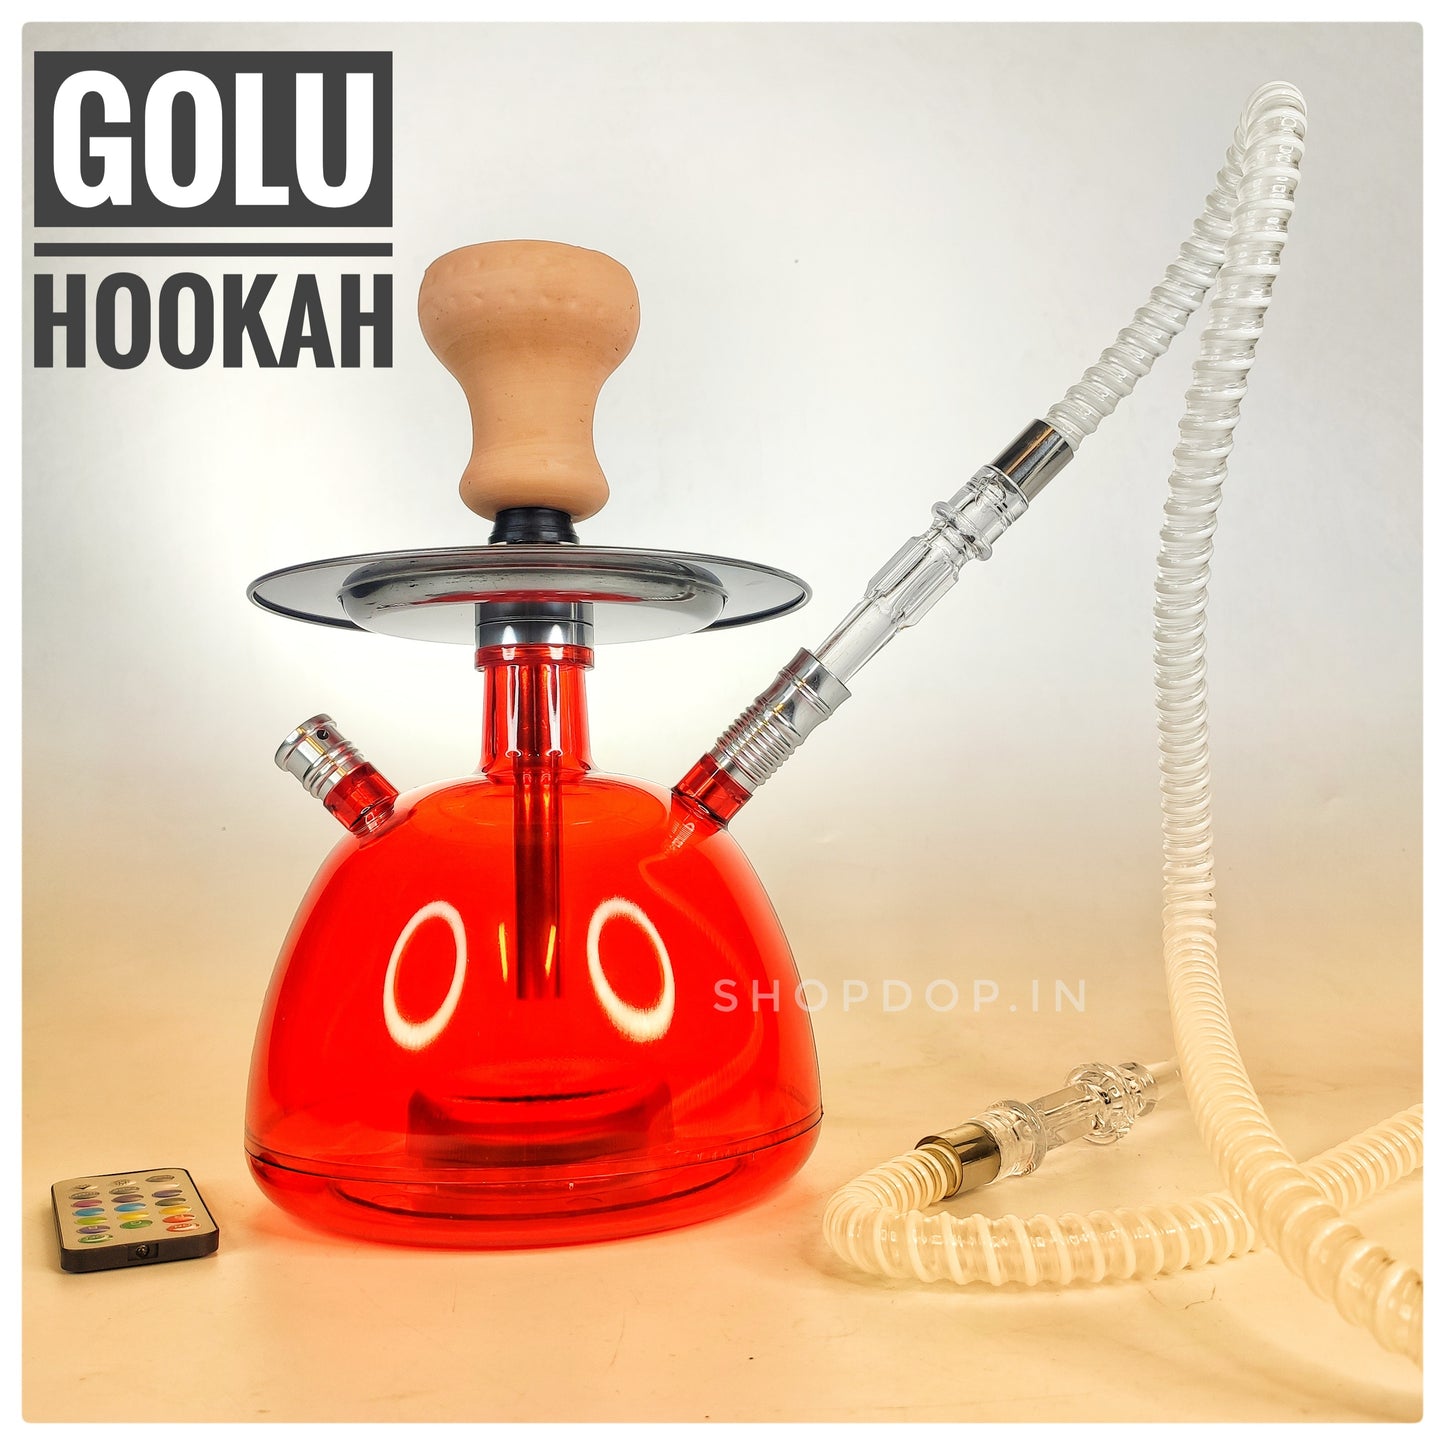 Acrylic Golu Hookah Online in India